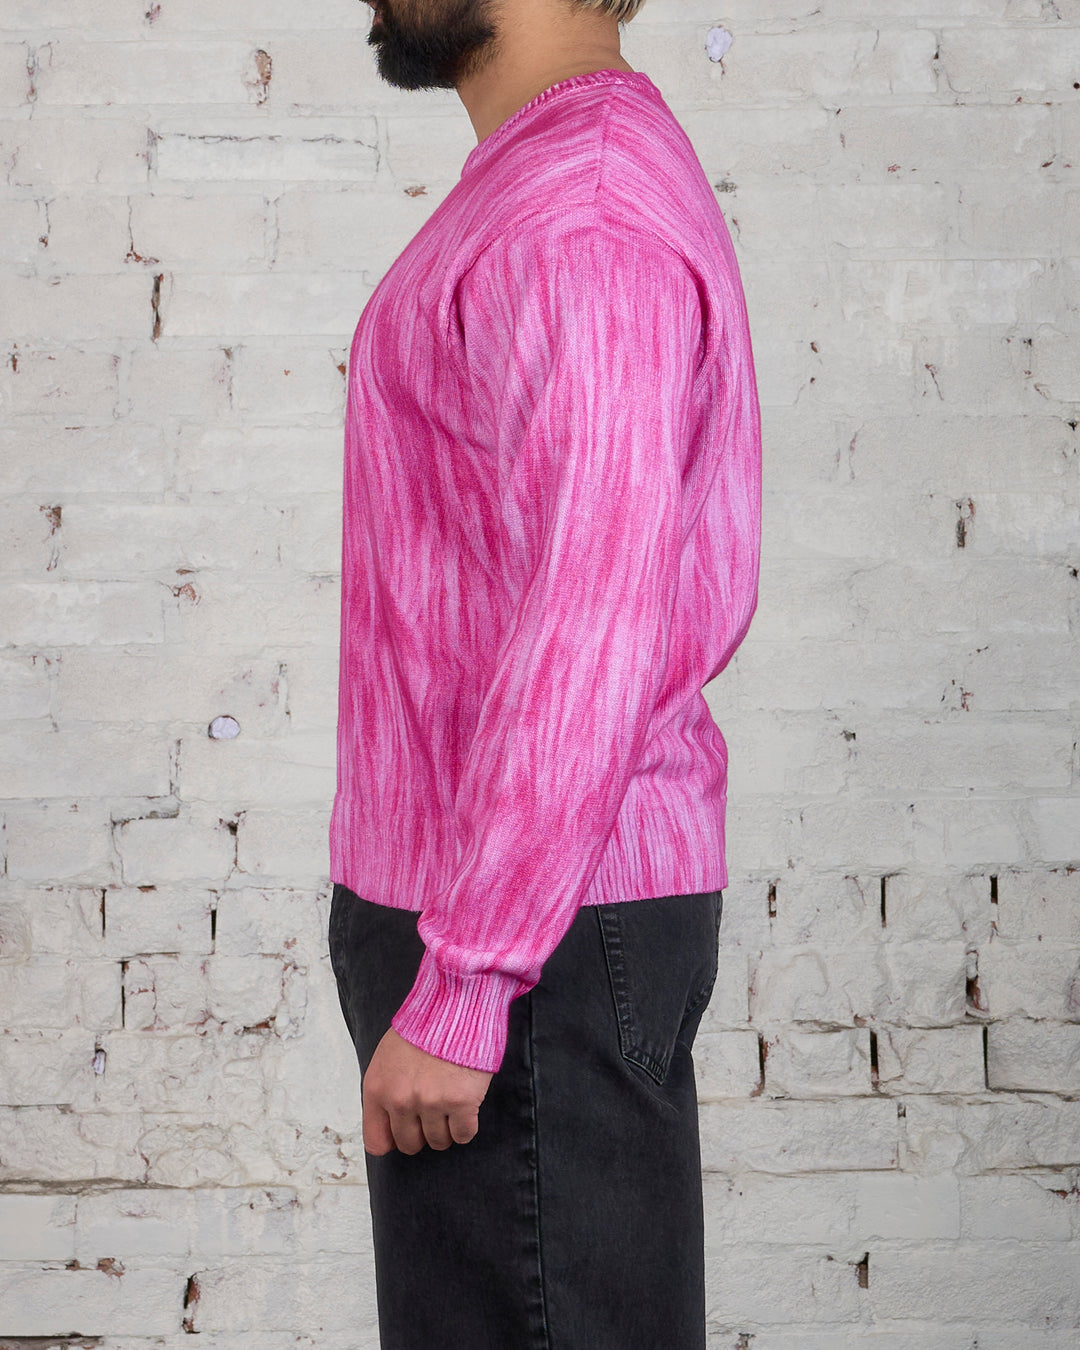 Stussy Printed Fur Sweater Pink